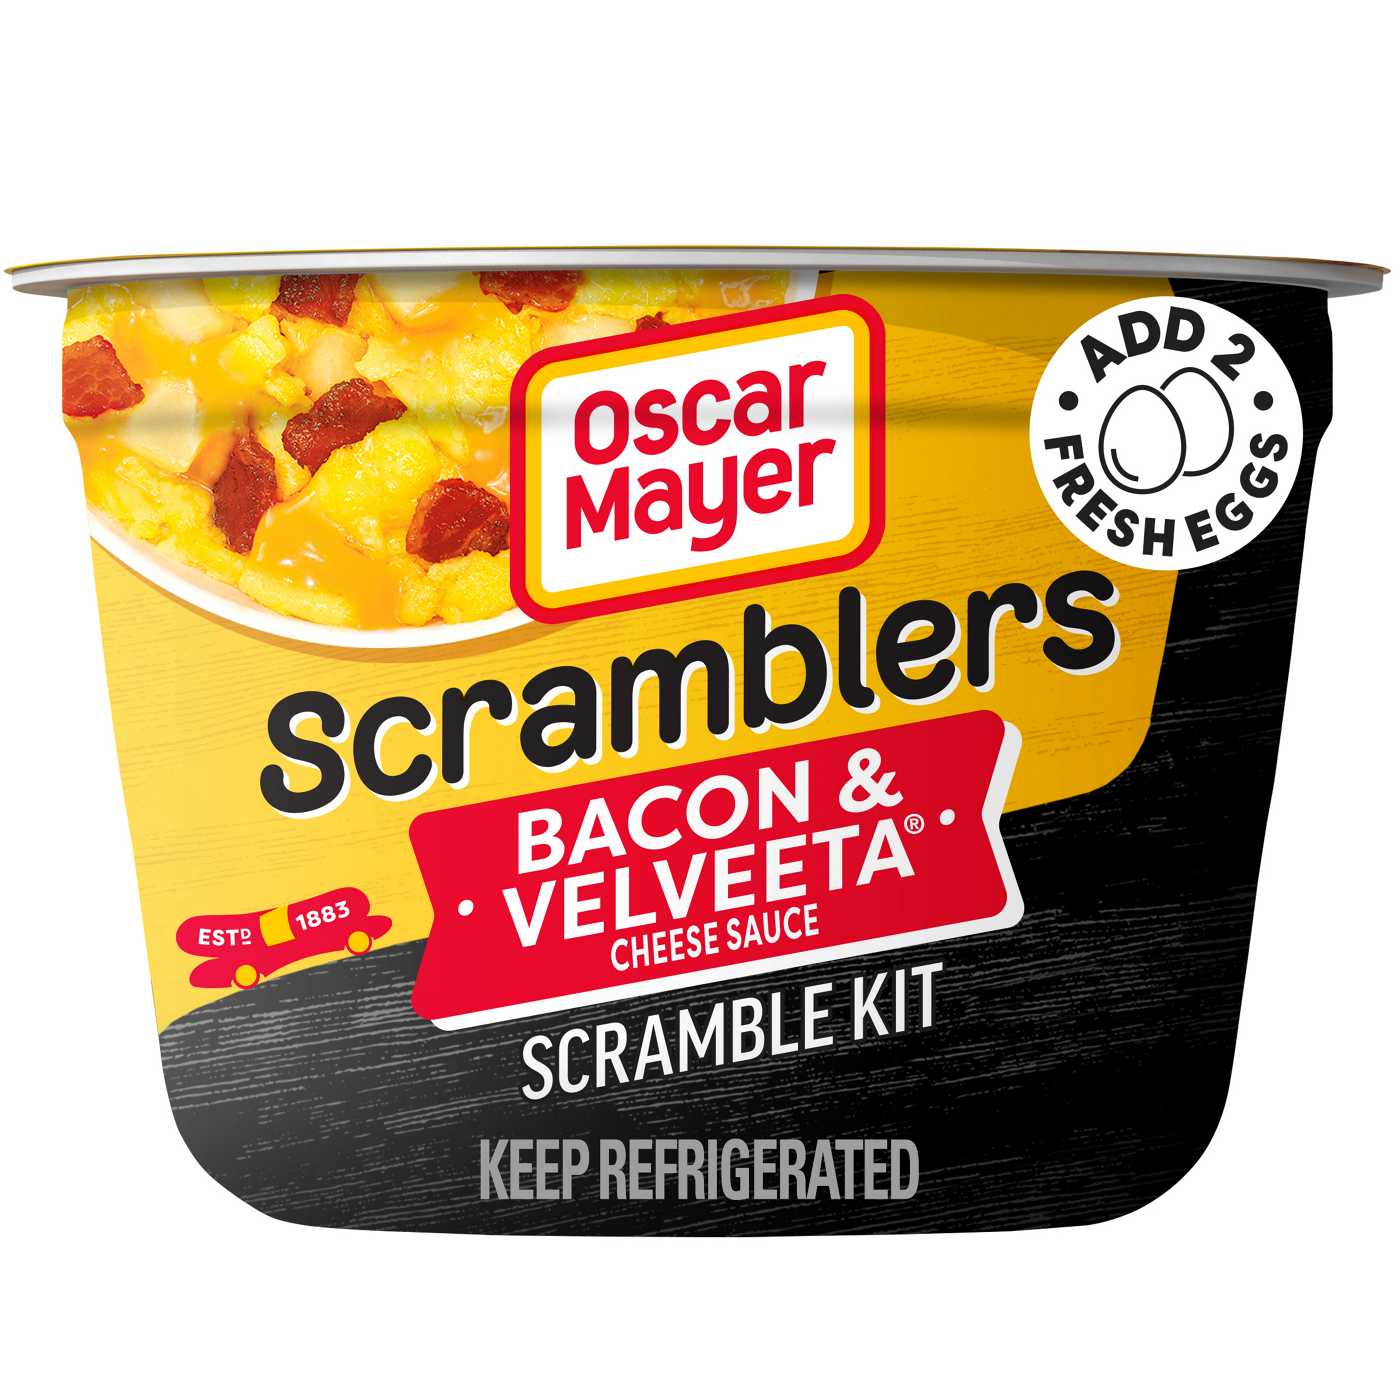 Oscar Mayer Scramblers Breakfast Scramble Kit - Bacon & Velveeta Cheese Sauce; image 1 of 6